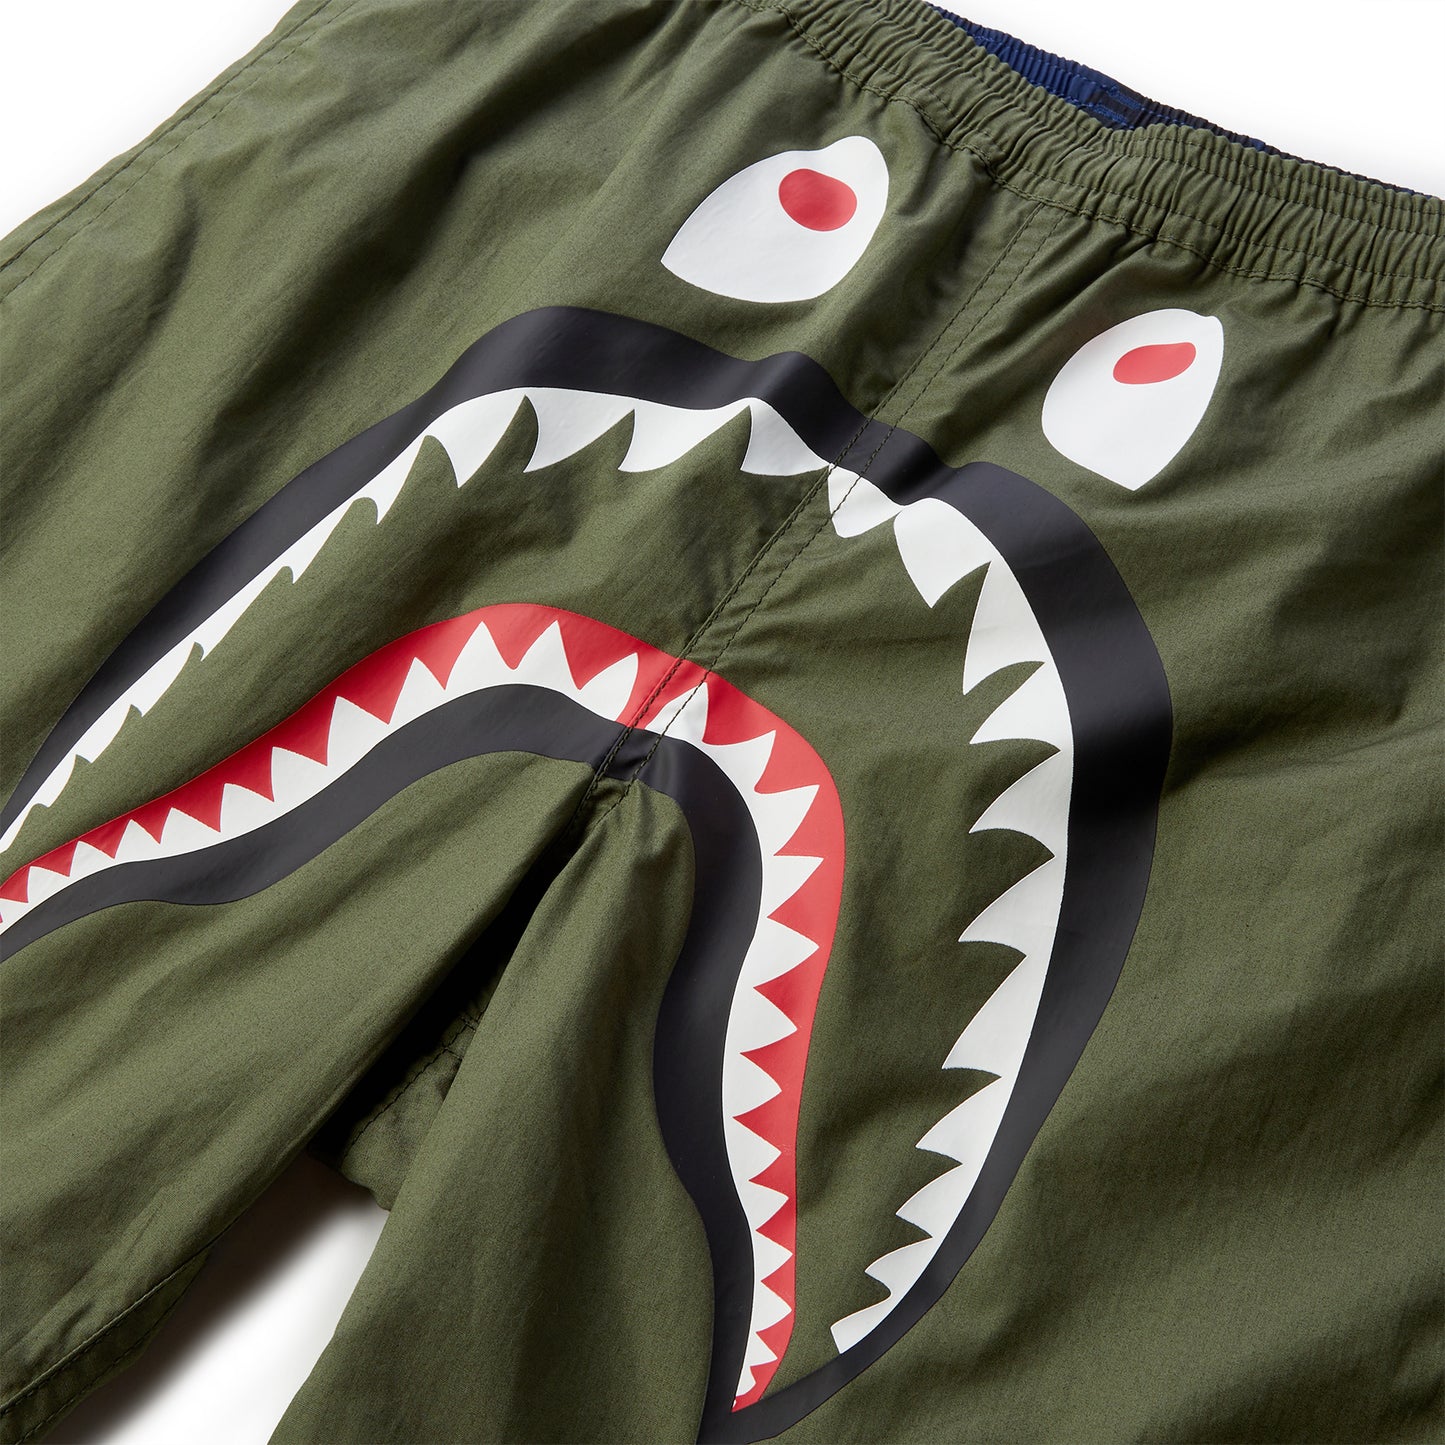 A Bathing Ape Color Camo Shark Reversible Shorts (Navy)